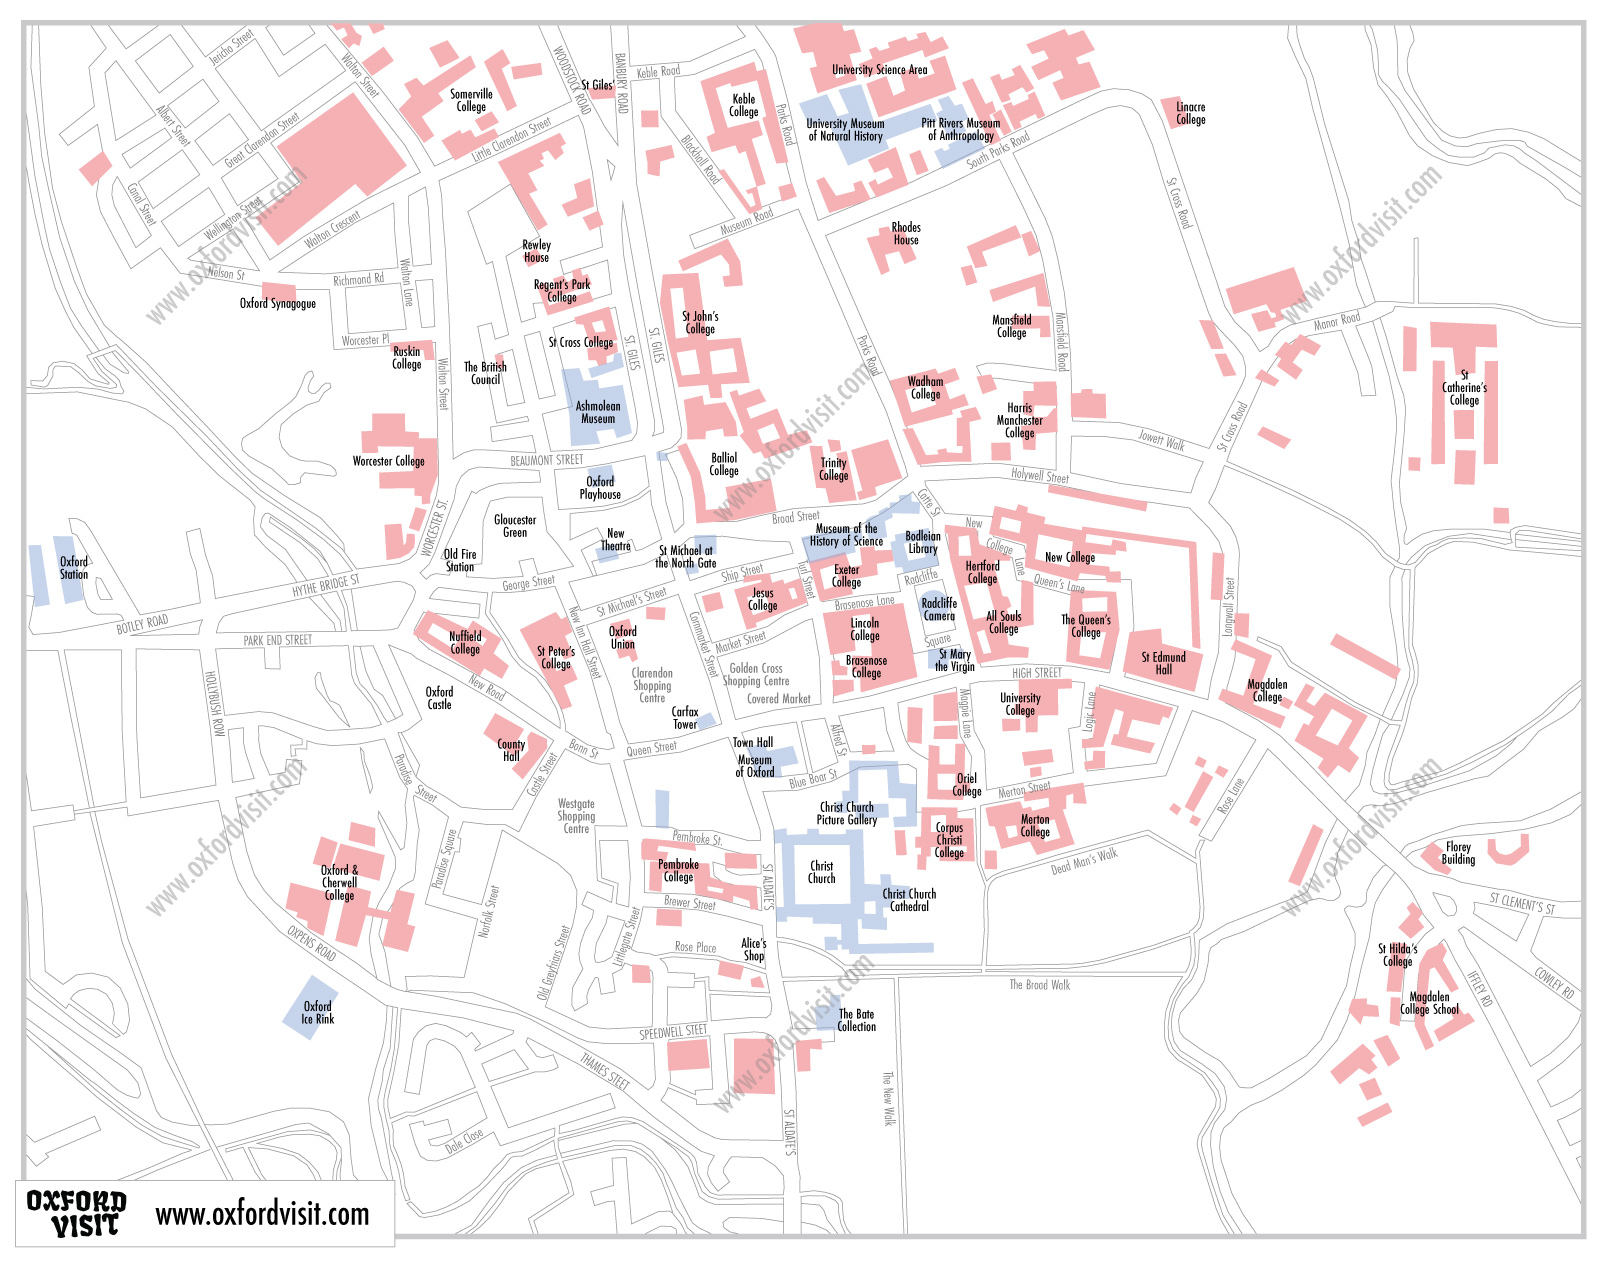 Oxford University Campus Map